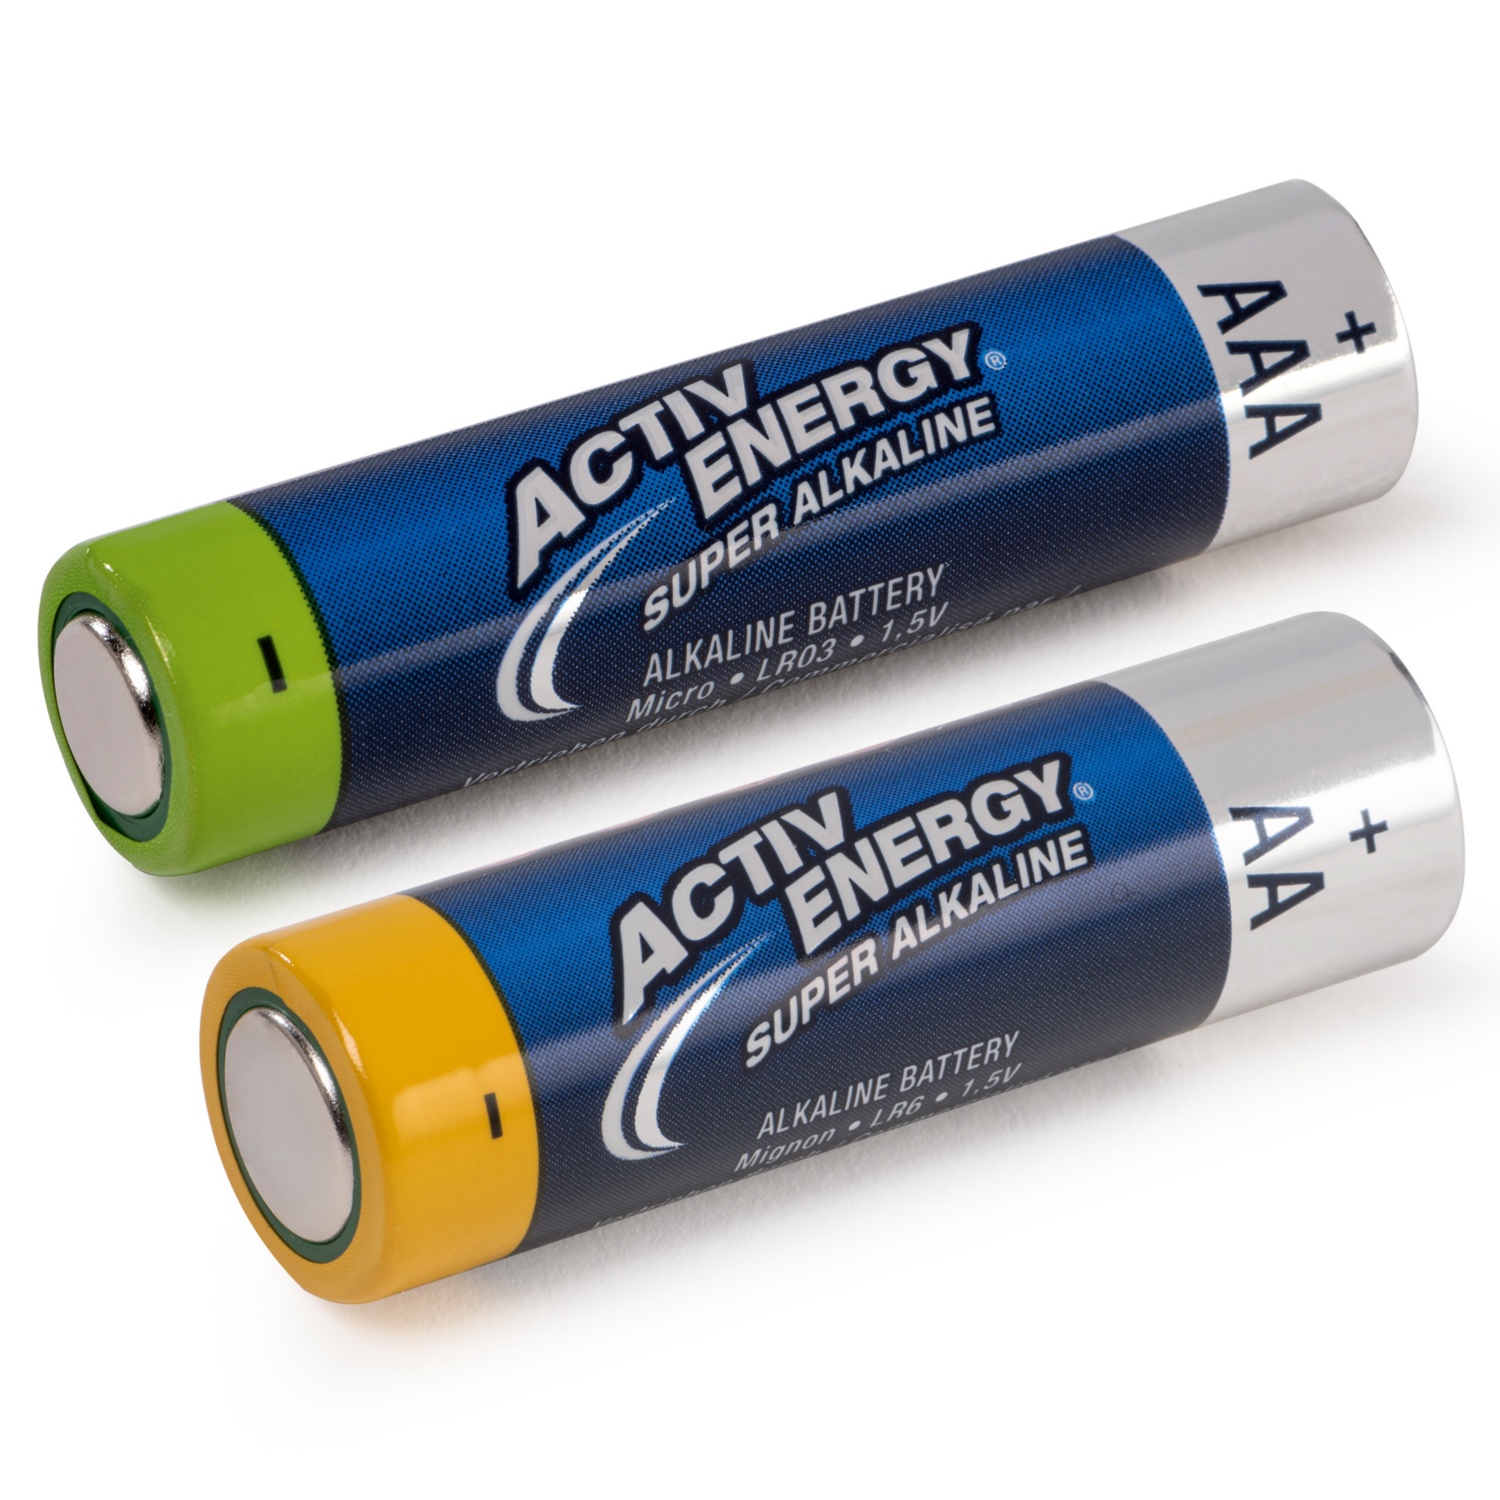 ACTIV ENERGY Batterien Big Box